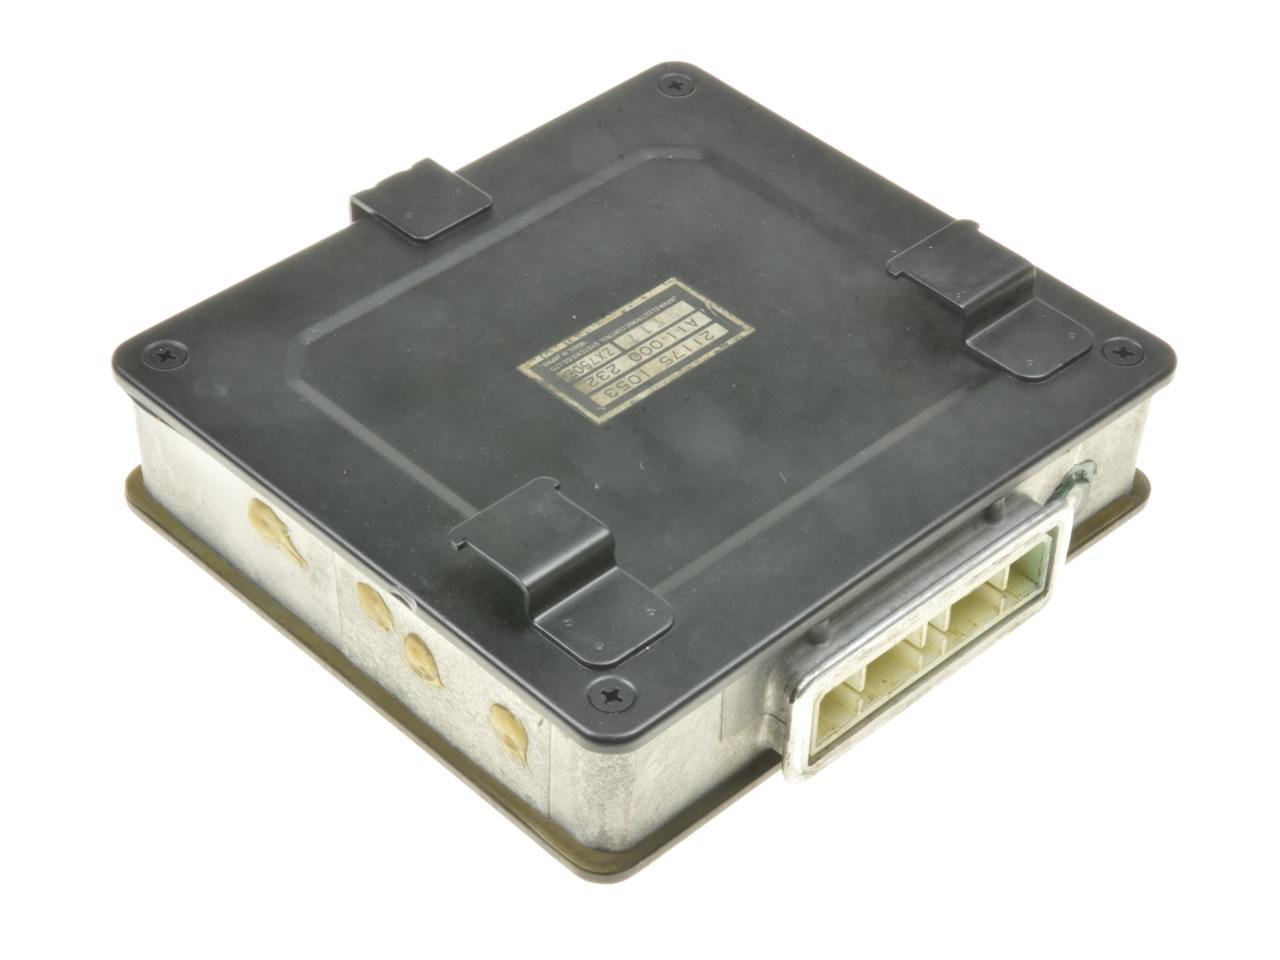 GPz750 Turbo injectie ECU ECM controller (21175-1053, A11-000 232, ZX750E)